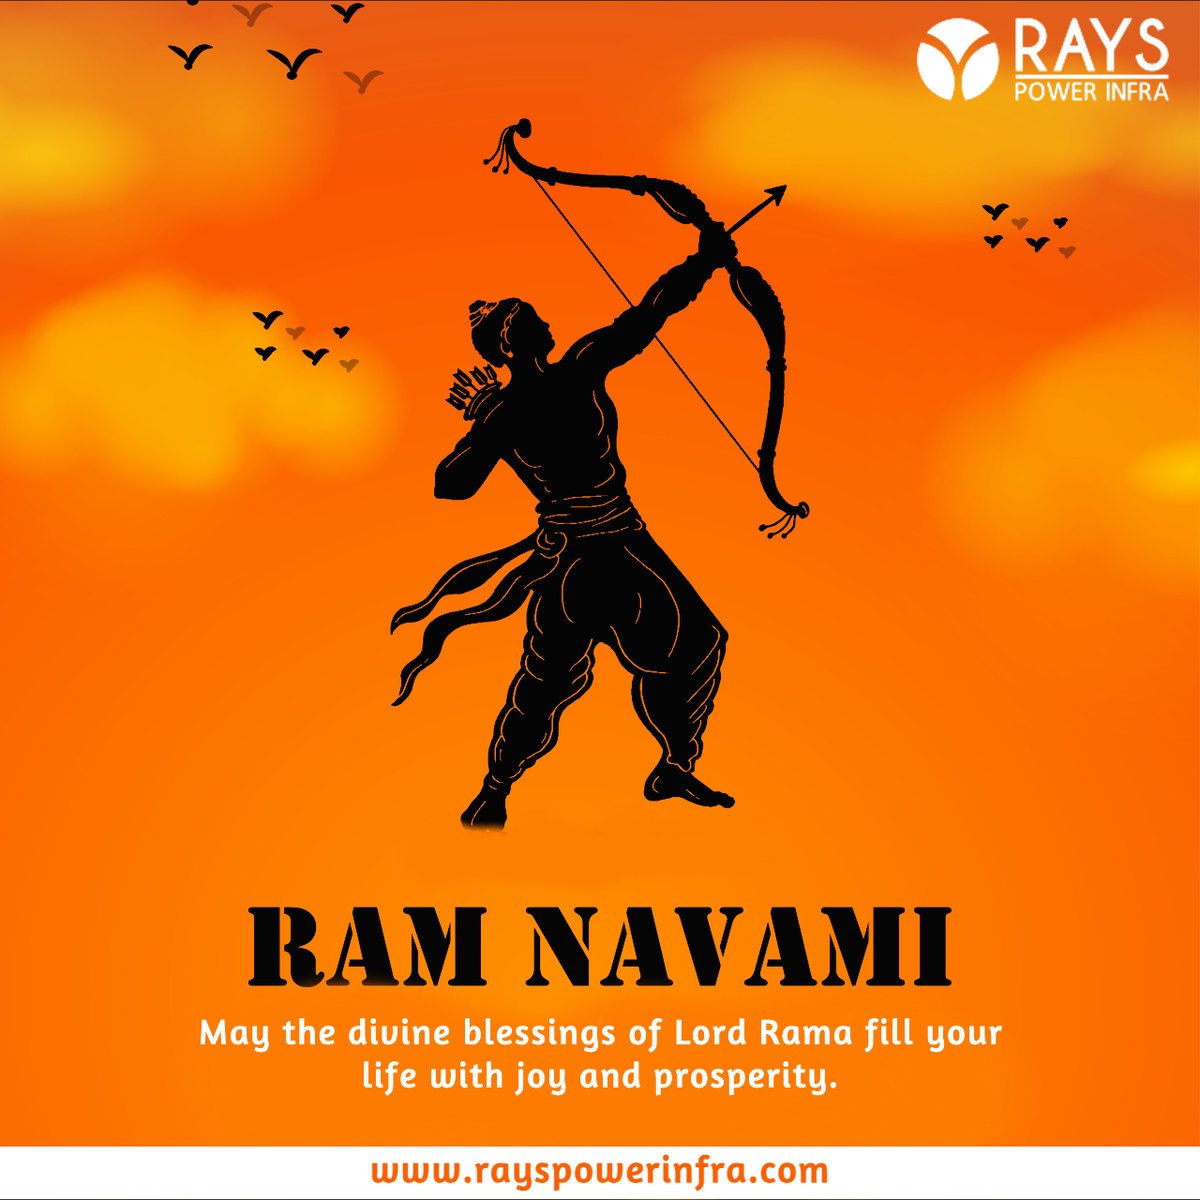 May the divine blessings of Lord Rama fill your life with joy and prosperity. Happy Ram Navami!

#raise_with_rays #rays_power_infra #solar_company #solarepc #solarpower #sustainableenergy #solarproject #renewalenergy #ram #ramnavami #AyodhyaRamMandir